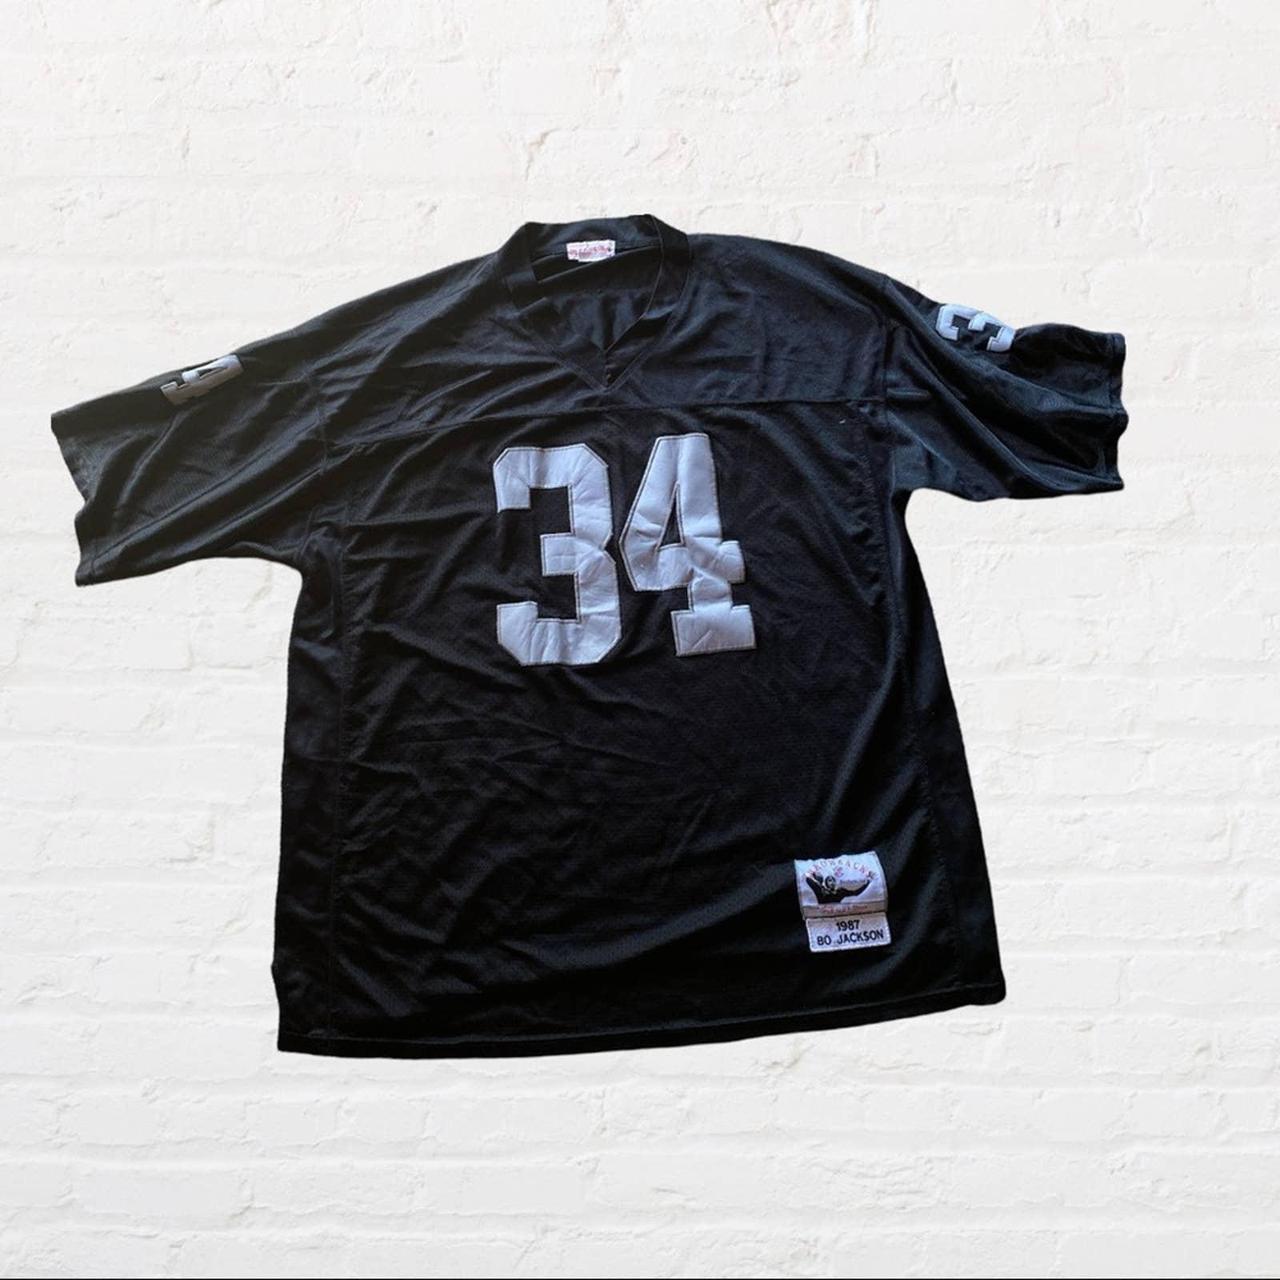 Mitchell & Ness x NFL Raiders Bo Jackson Black T-Shirt